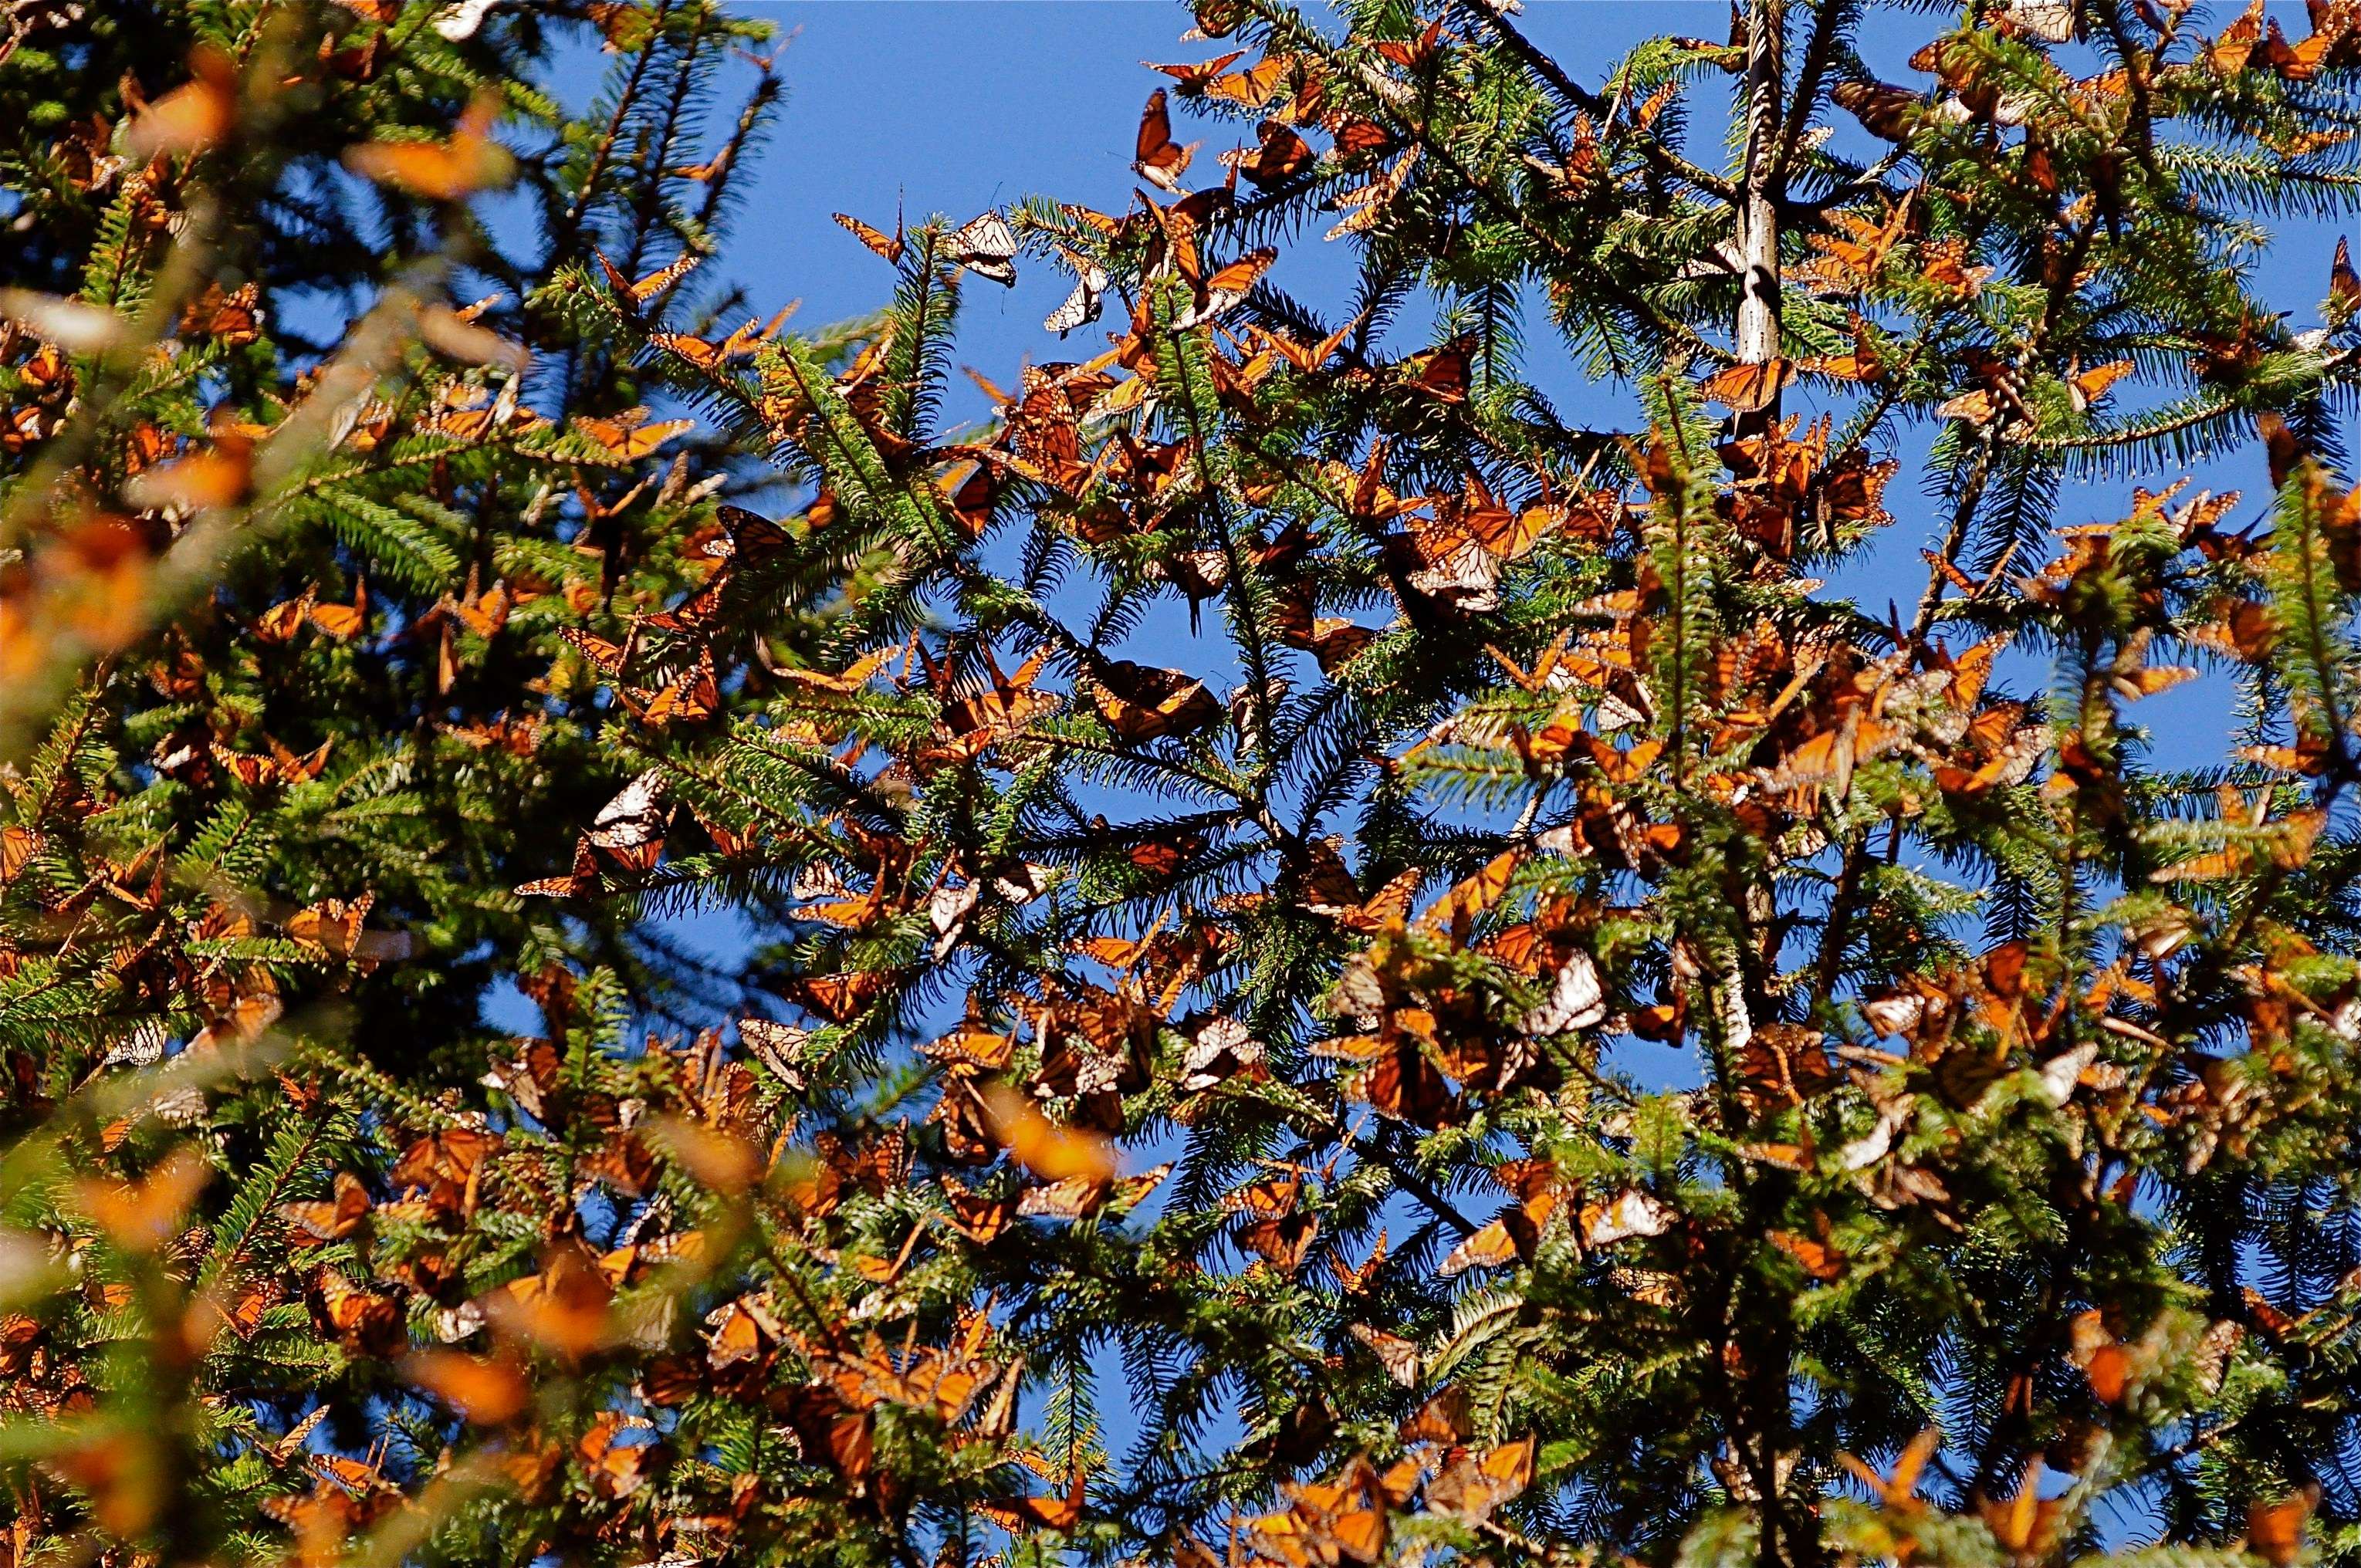 Monarchs on fir branches